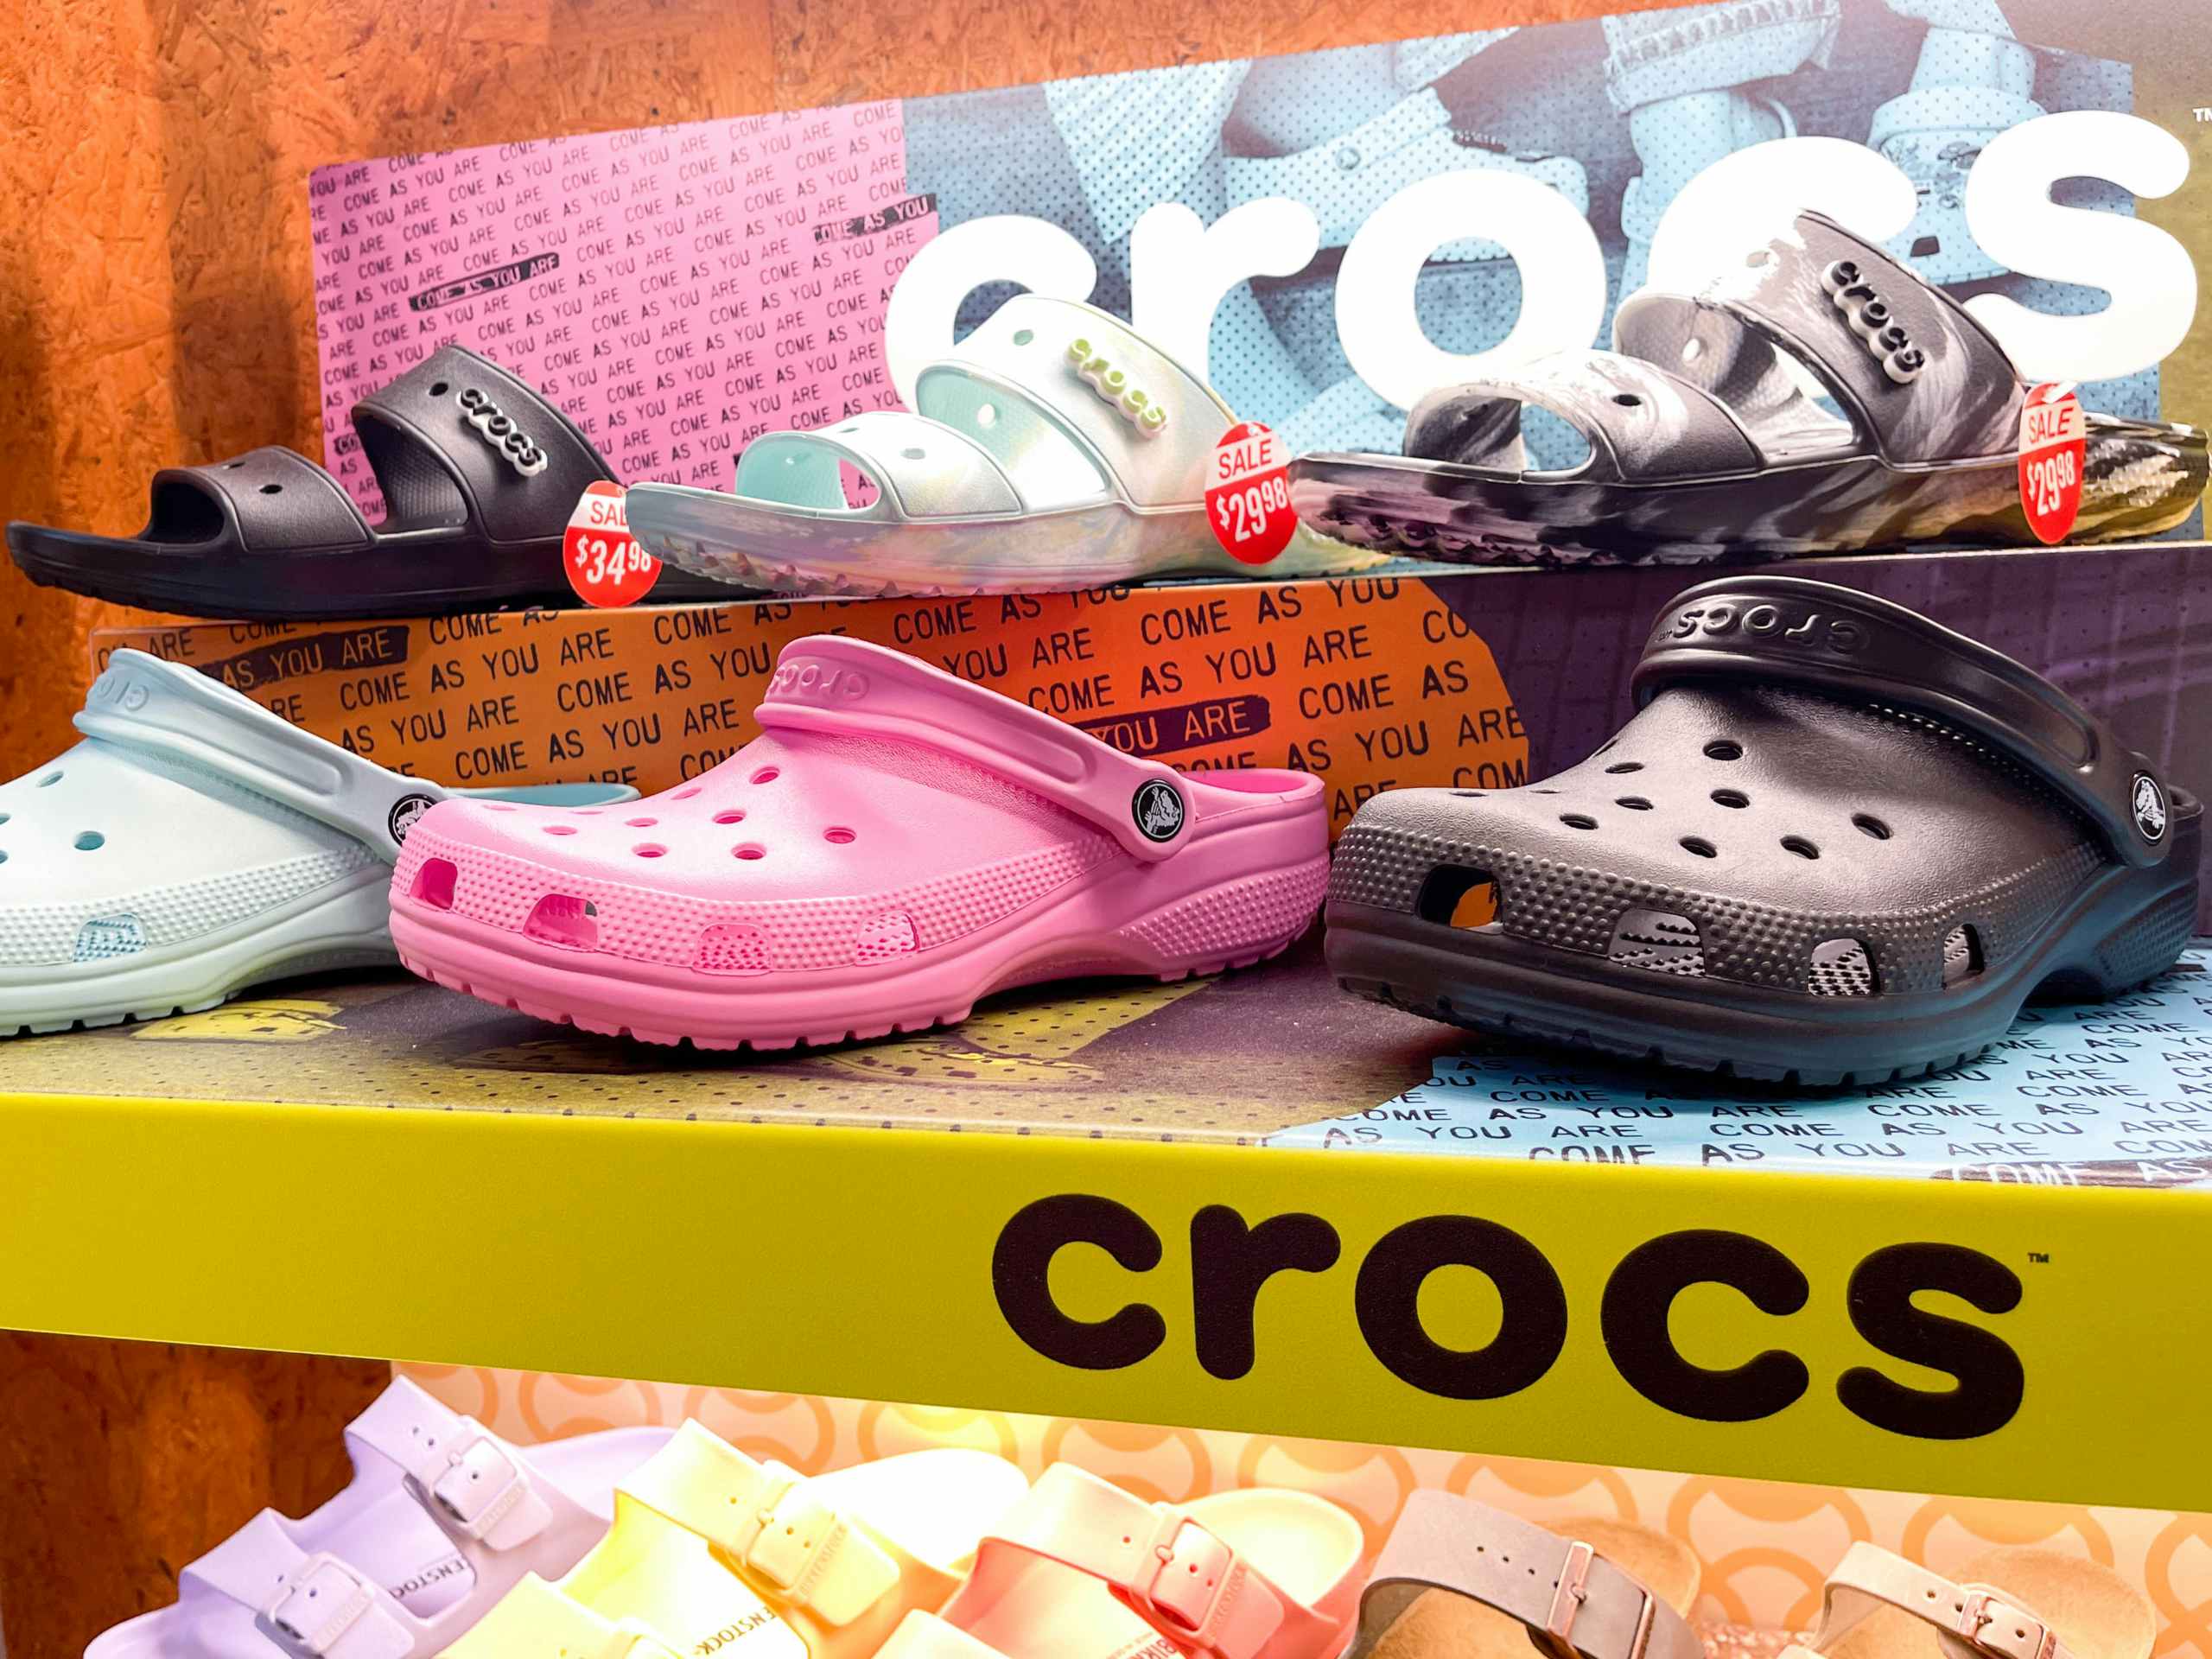 Massive Crocs Shoe Sale: $16 Sandals, $23 Baya Clogs, and More